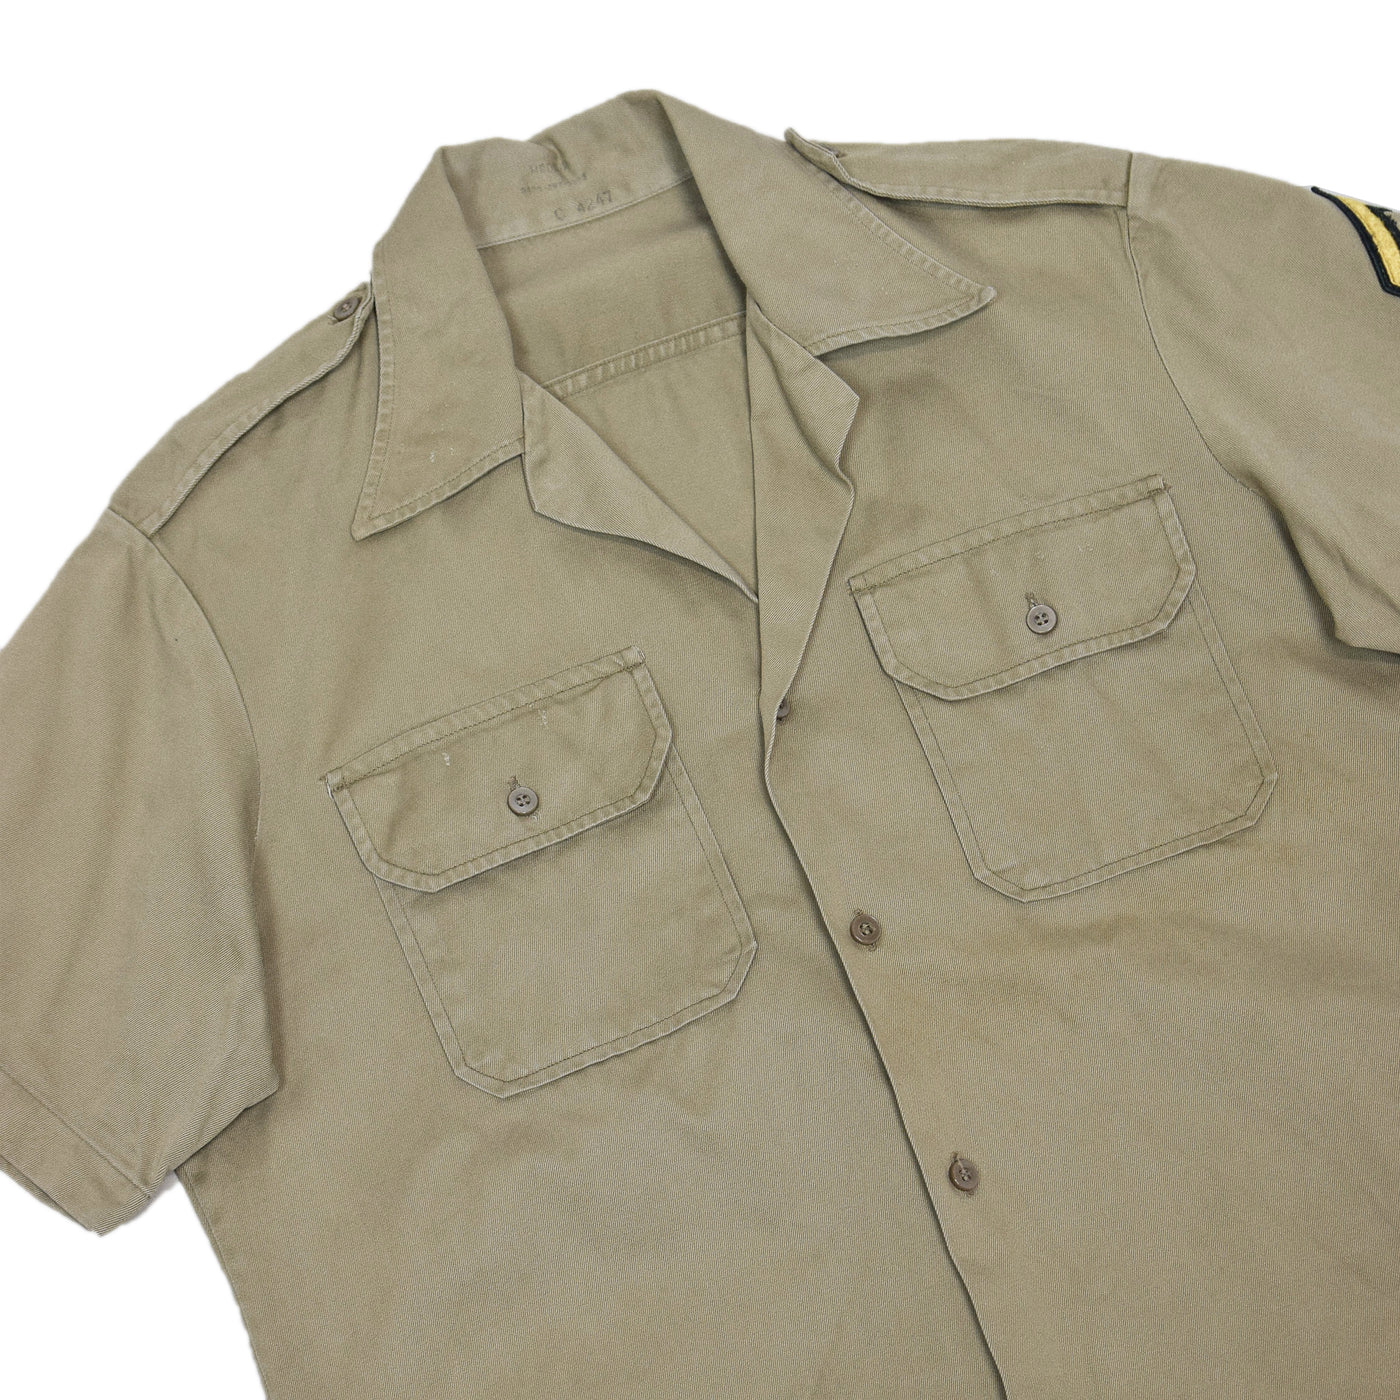 Vintage 70s Vietnam Era US Army Khaki Cotton Twill Military Summer Shirt M chest